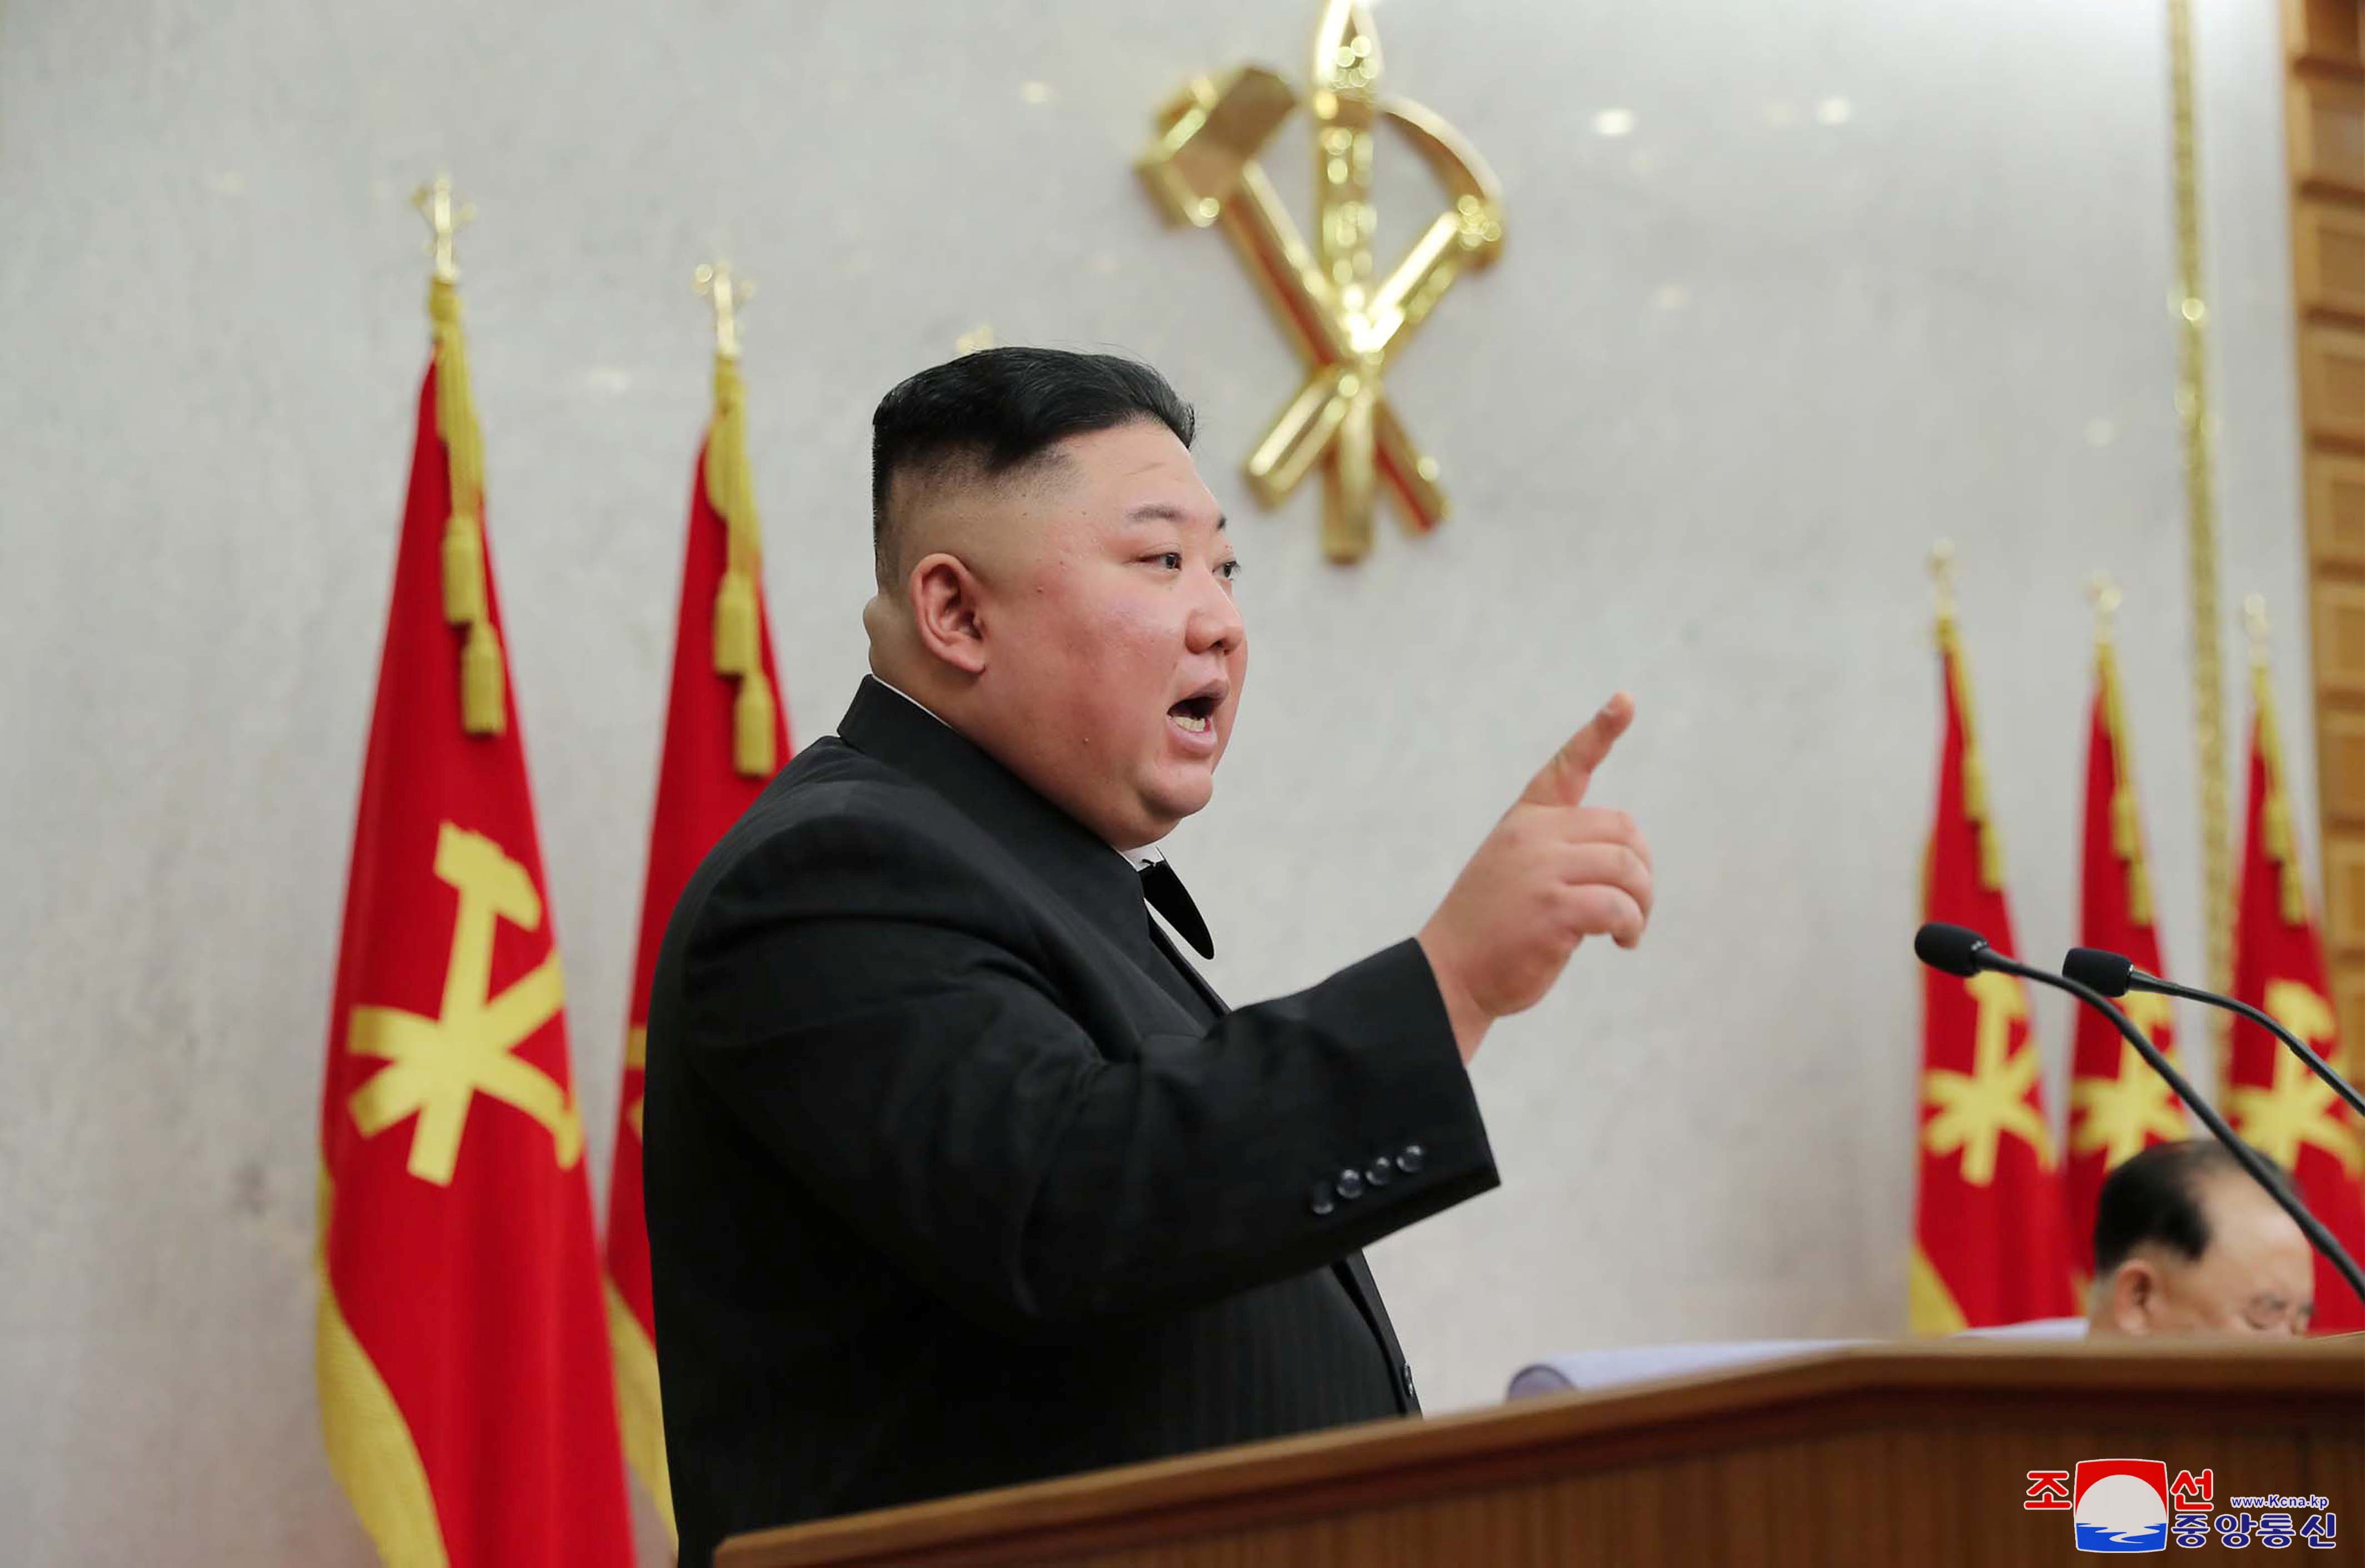 North Korea’s Kim calls for thorough implementation of 5-year economic plan